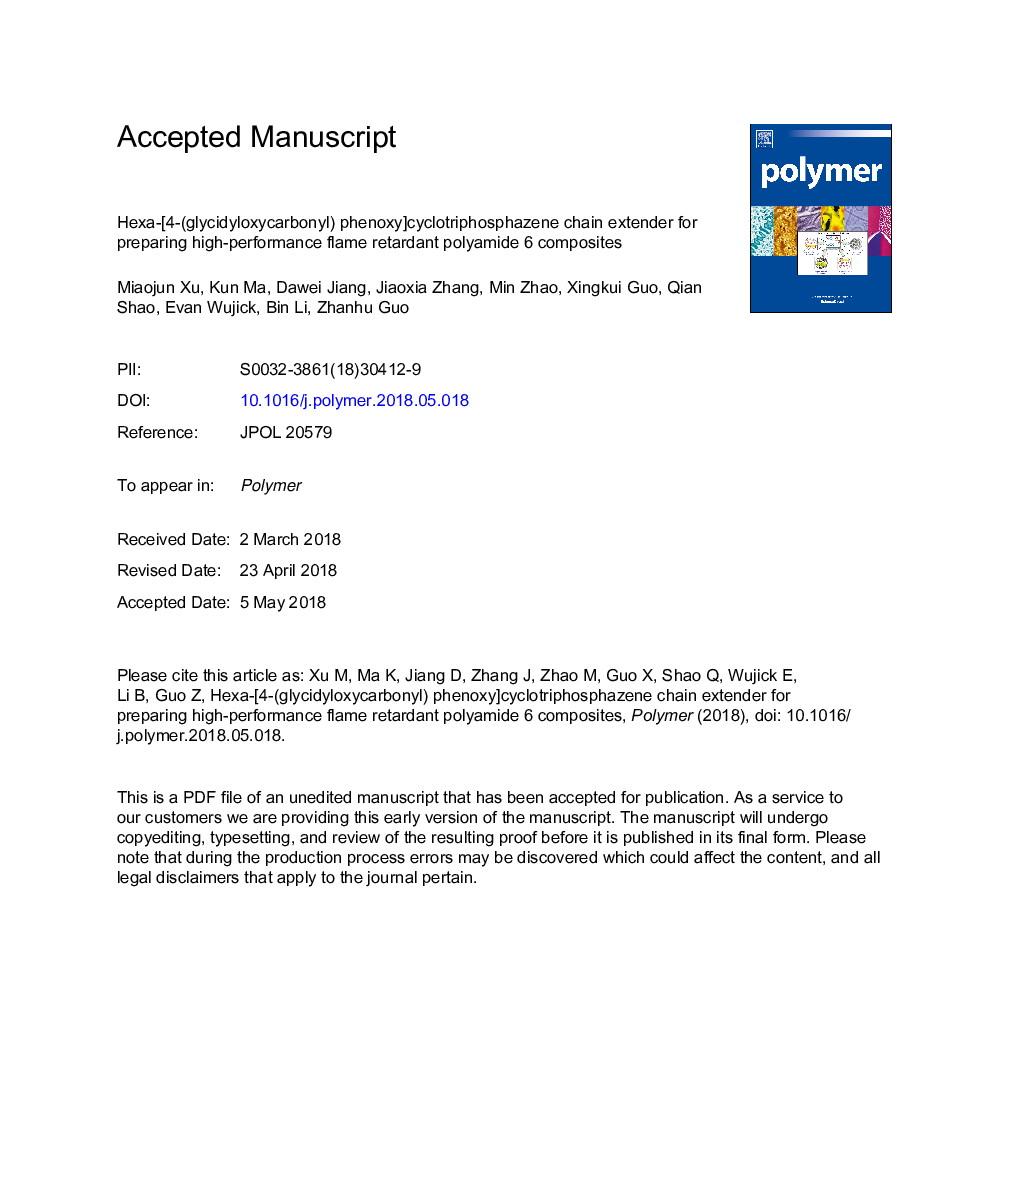 Hexa-[4-(glycidyloxycarbonyl) phenoxy]cyclotriphosphazene chain extender for preparing high-performance flame retardant polyamide 6 composites